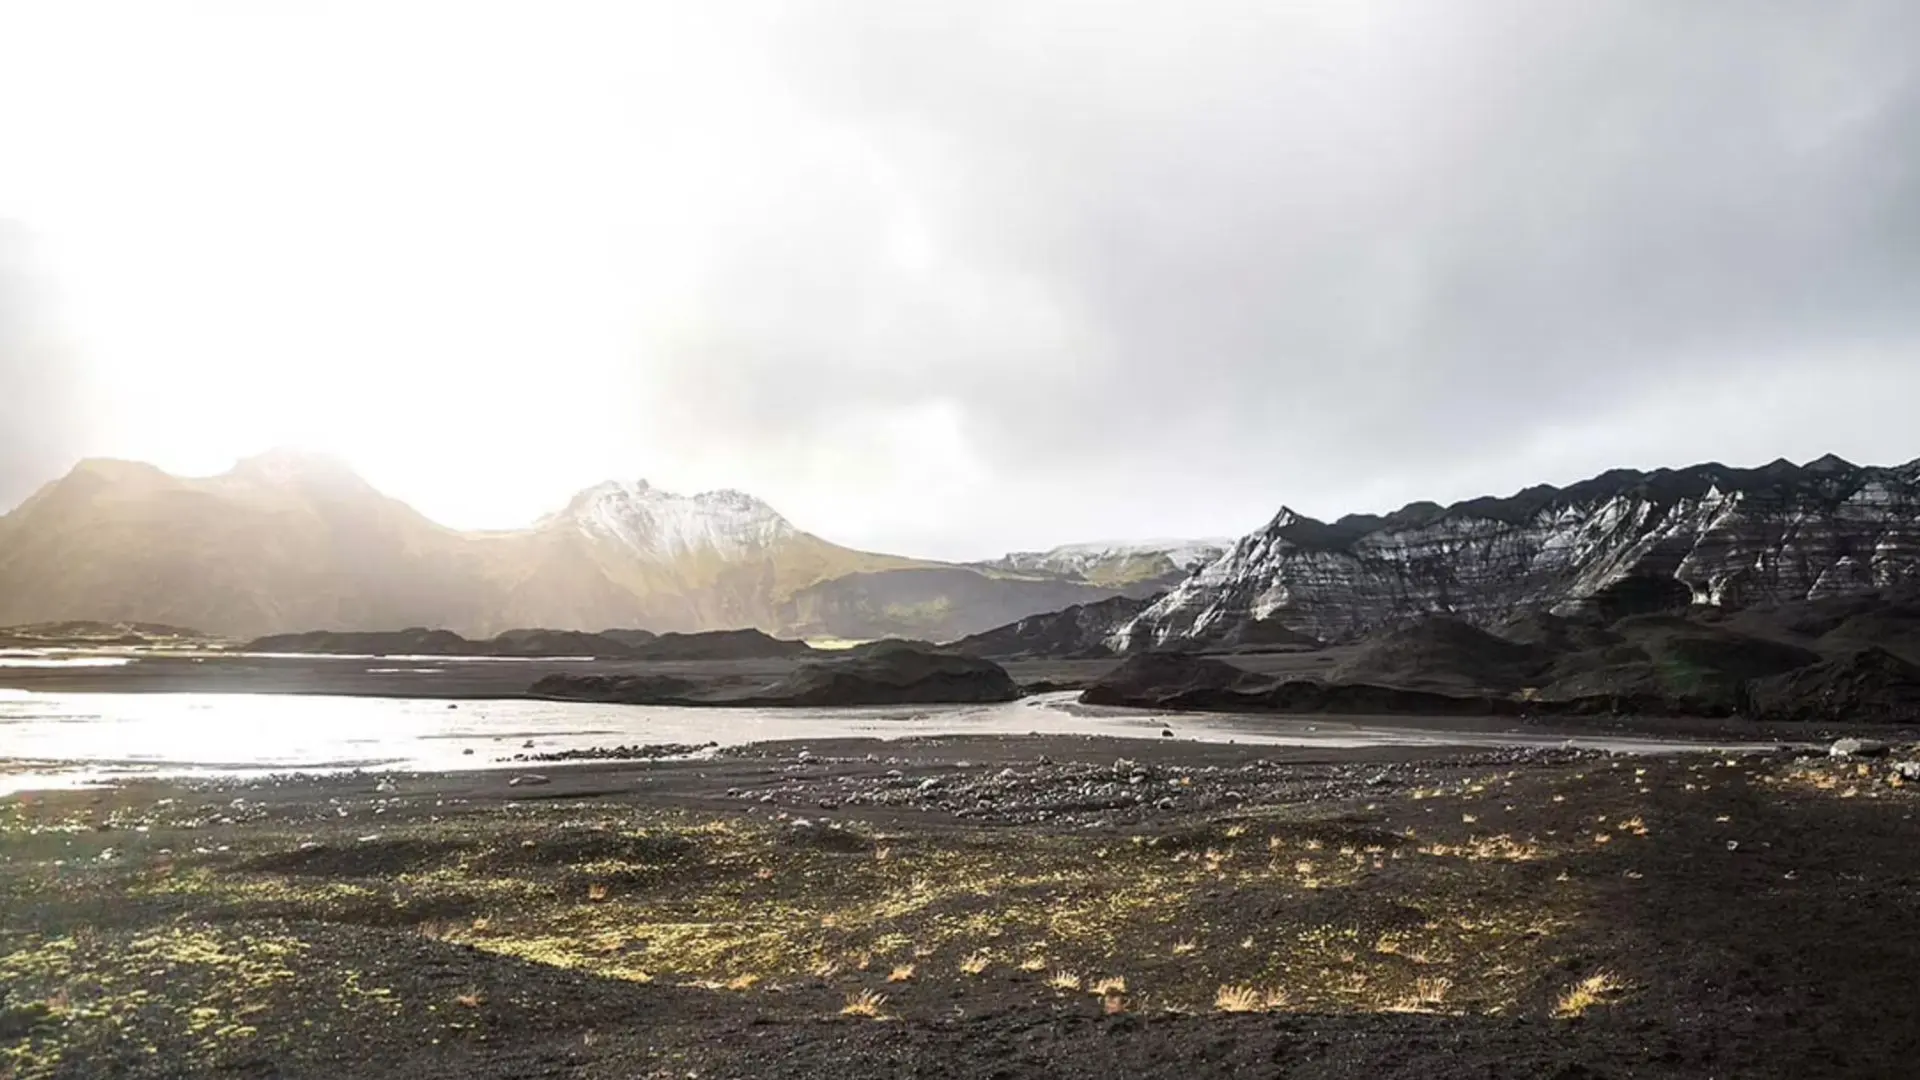 Glacier views in South Iceland